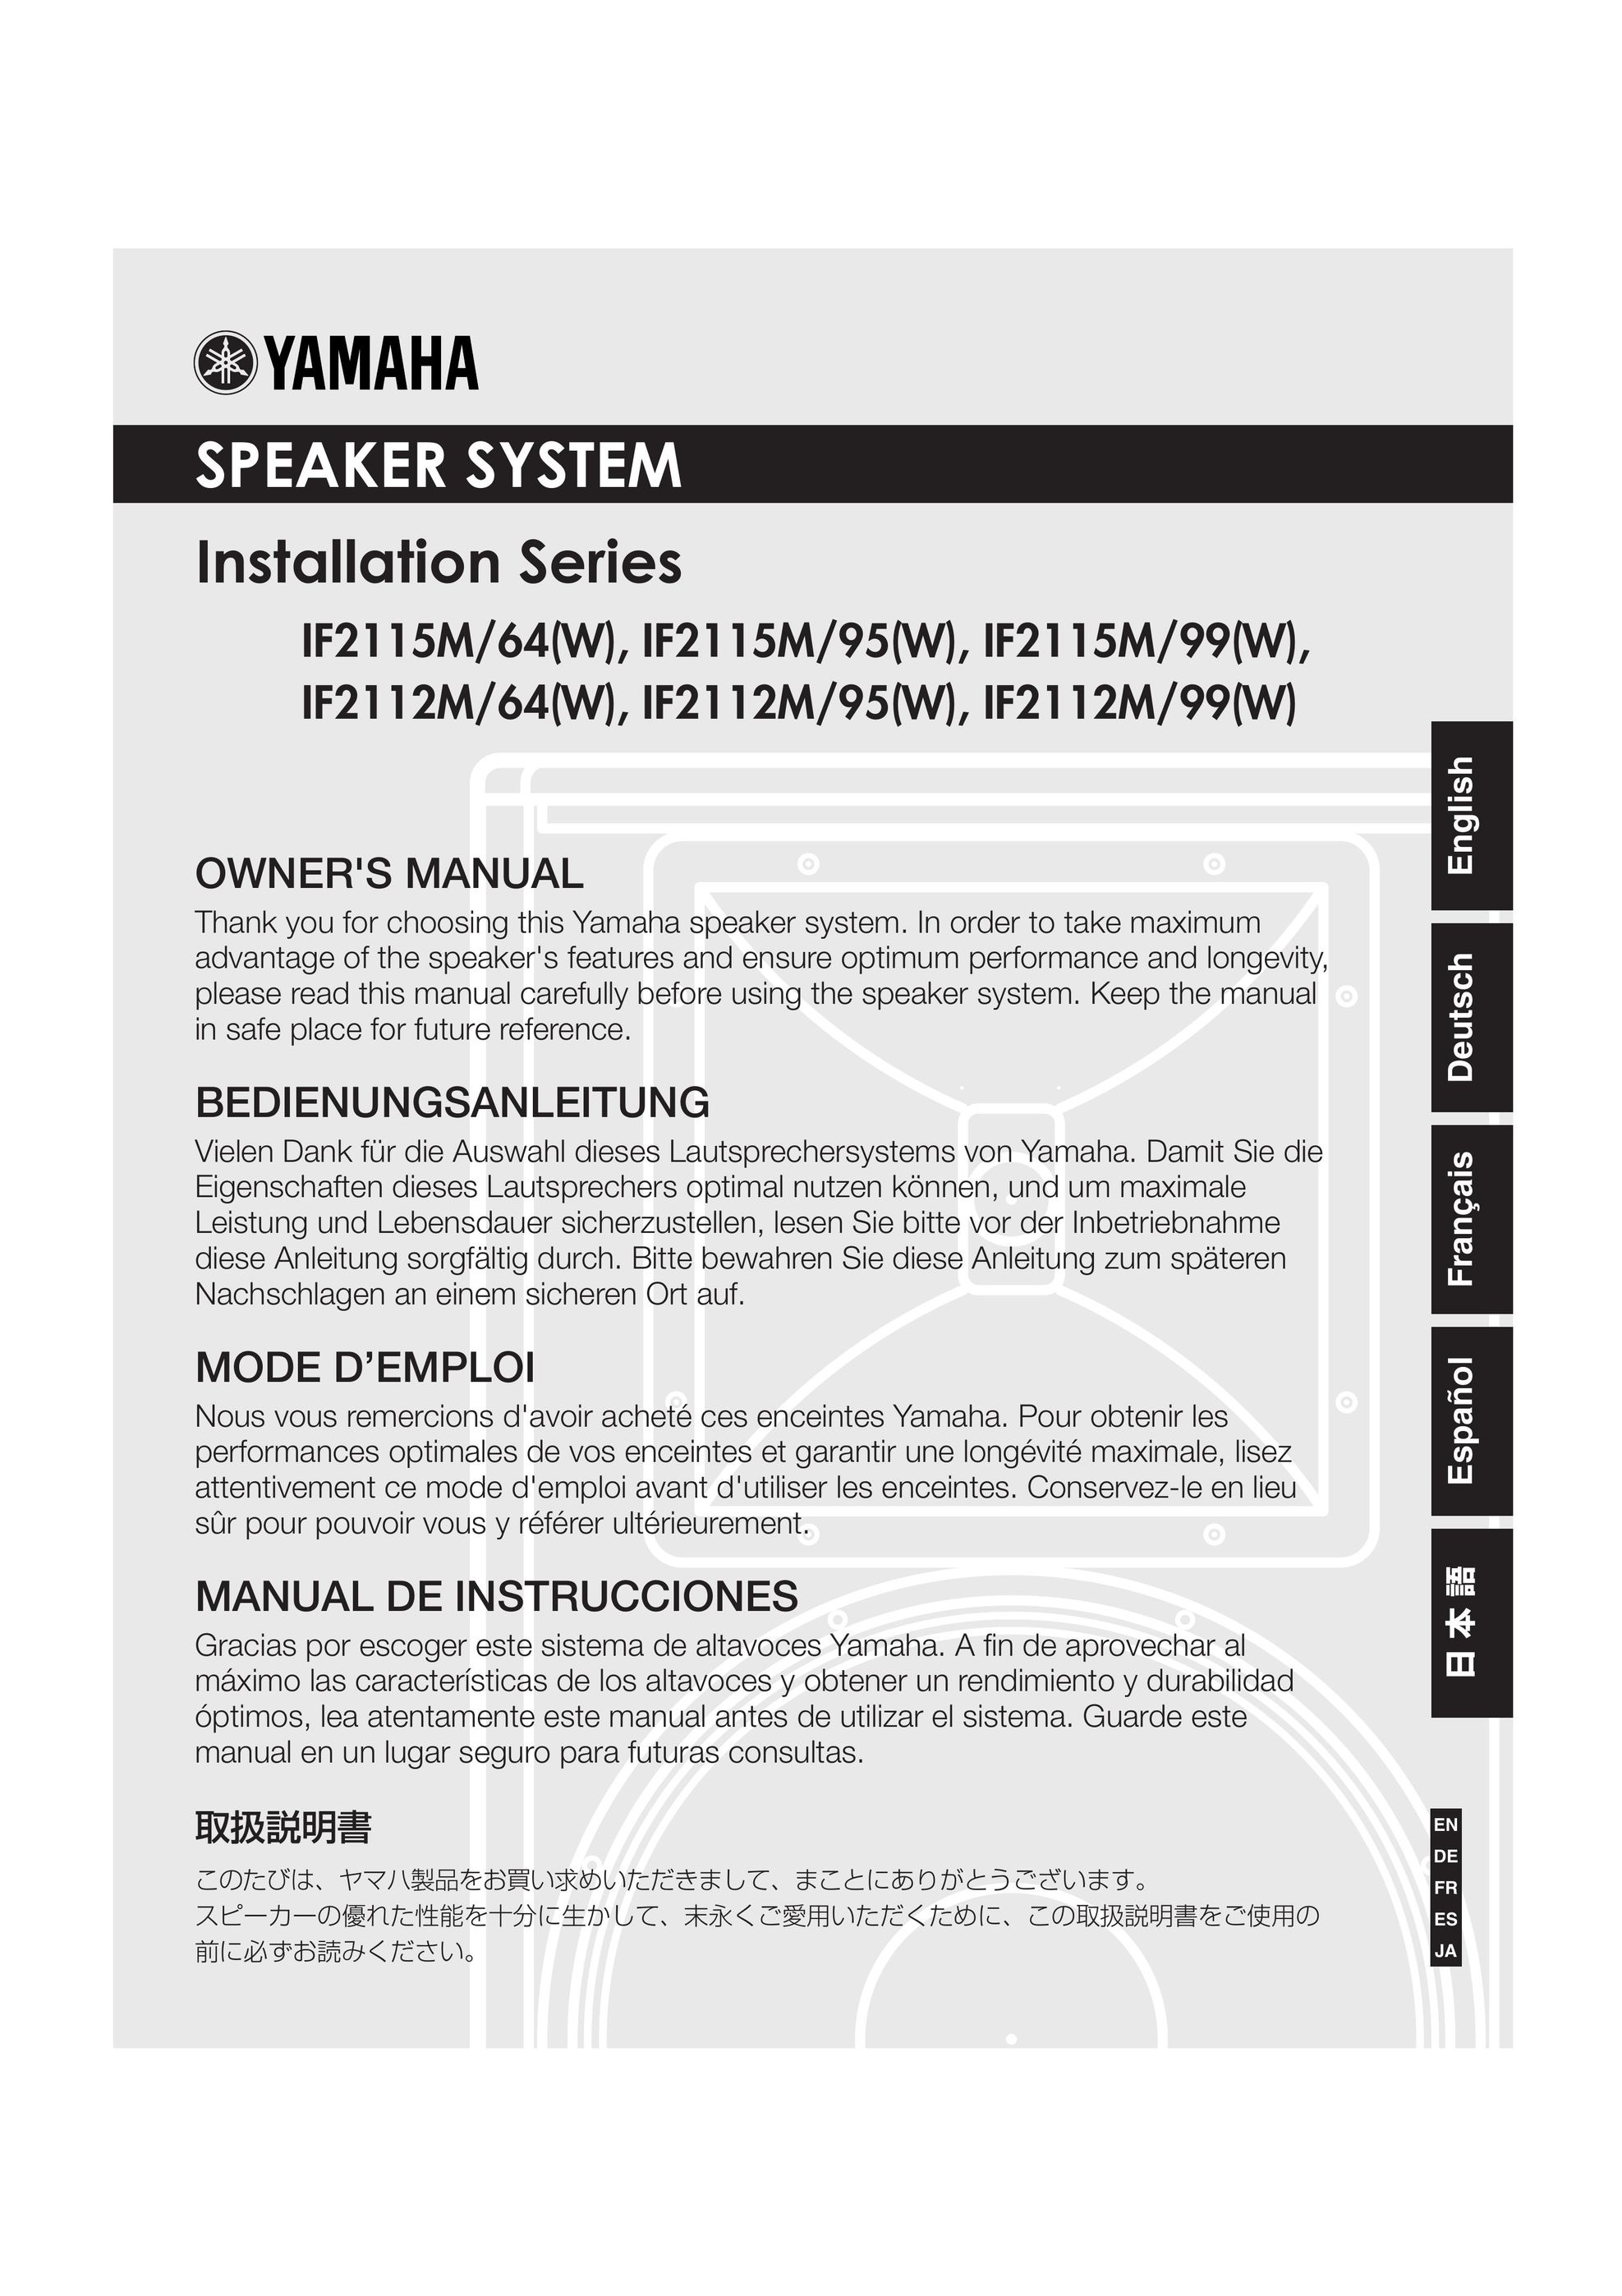 Yamaha IF2112M/99(W) Portable Speaker User Manual